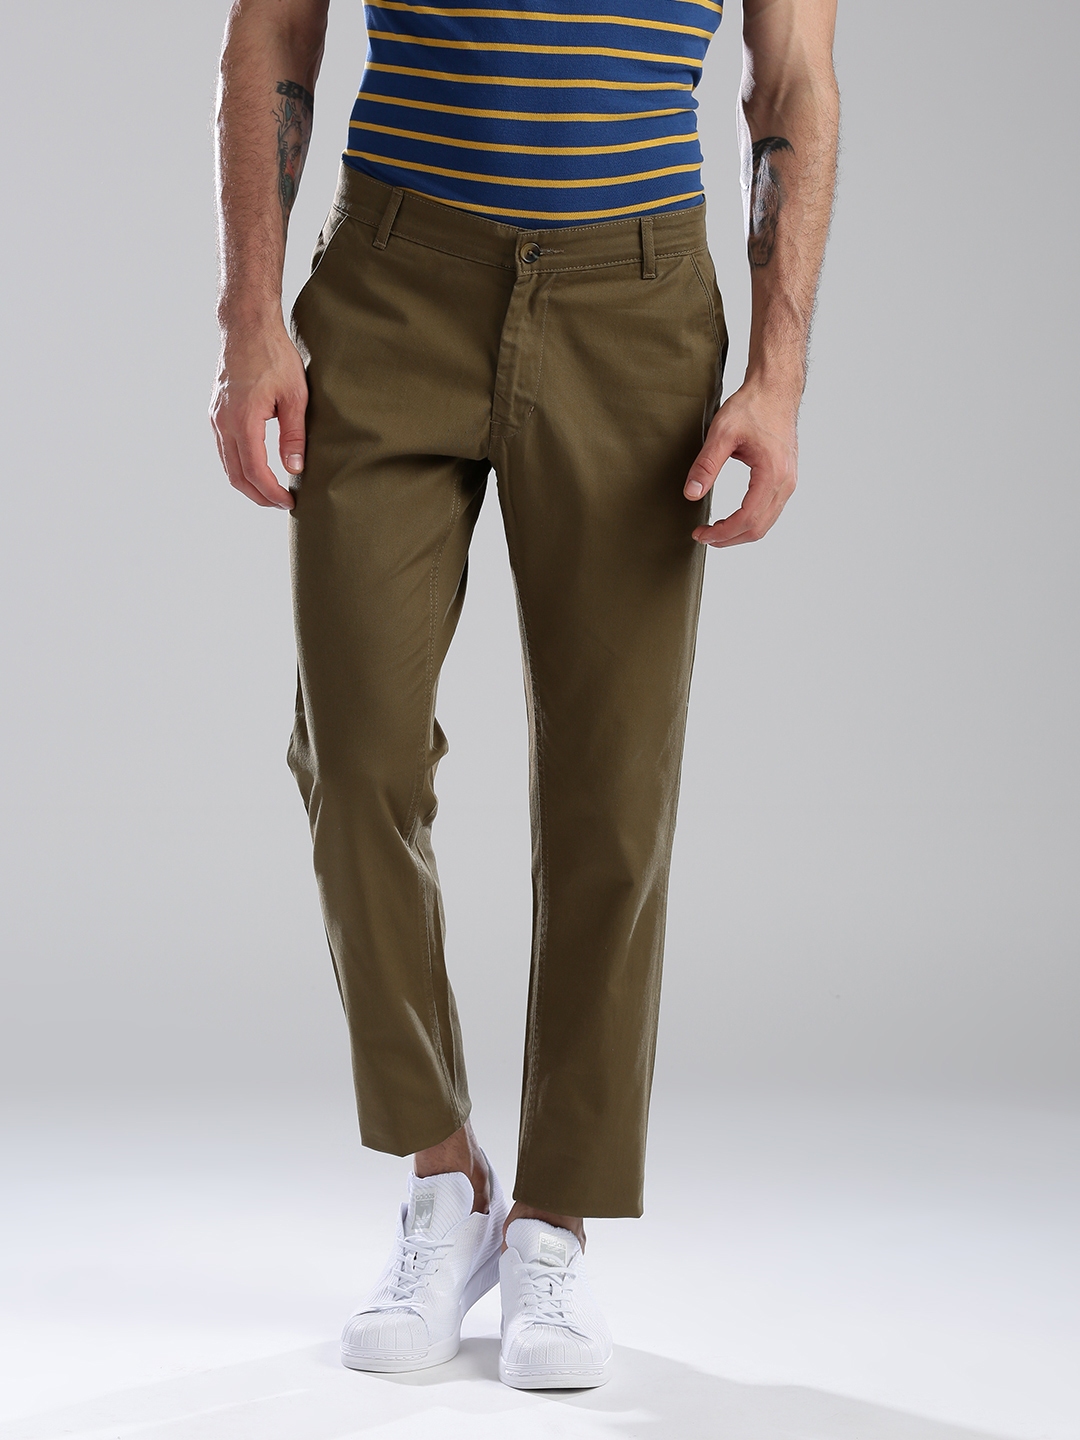 Buy Hubberholme Men Grey Slim Fit Solid Chinos  Trousers for Men 10996384   Myntra